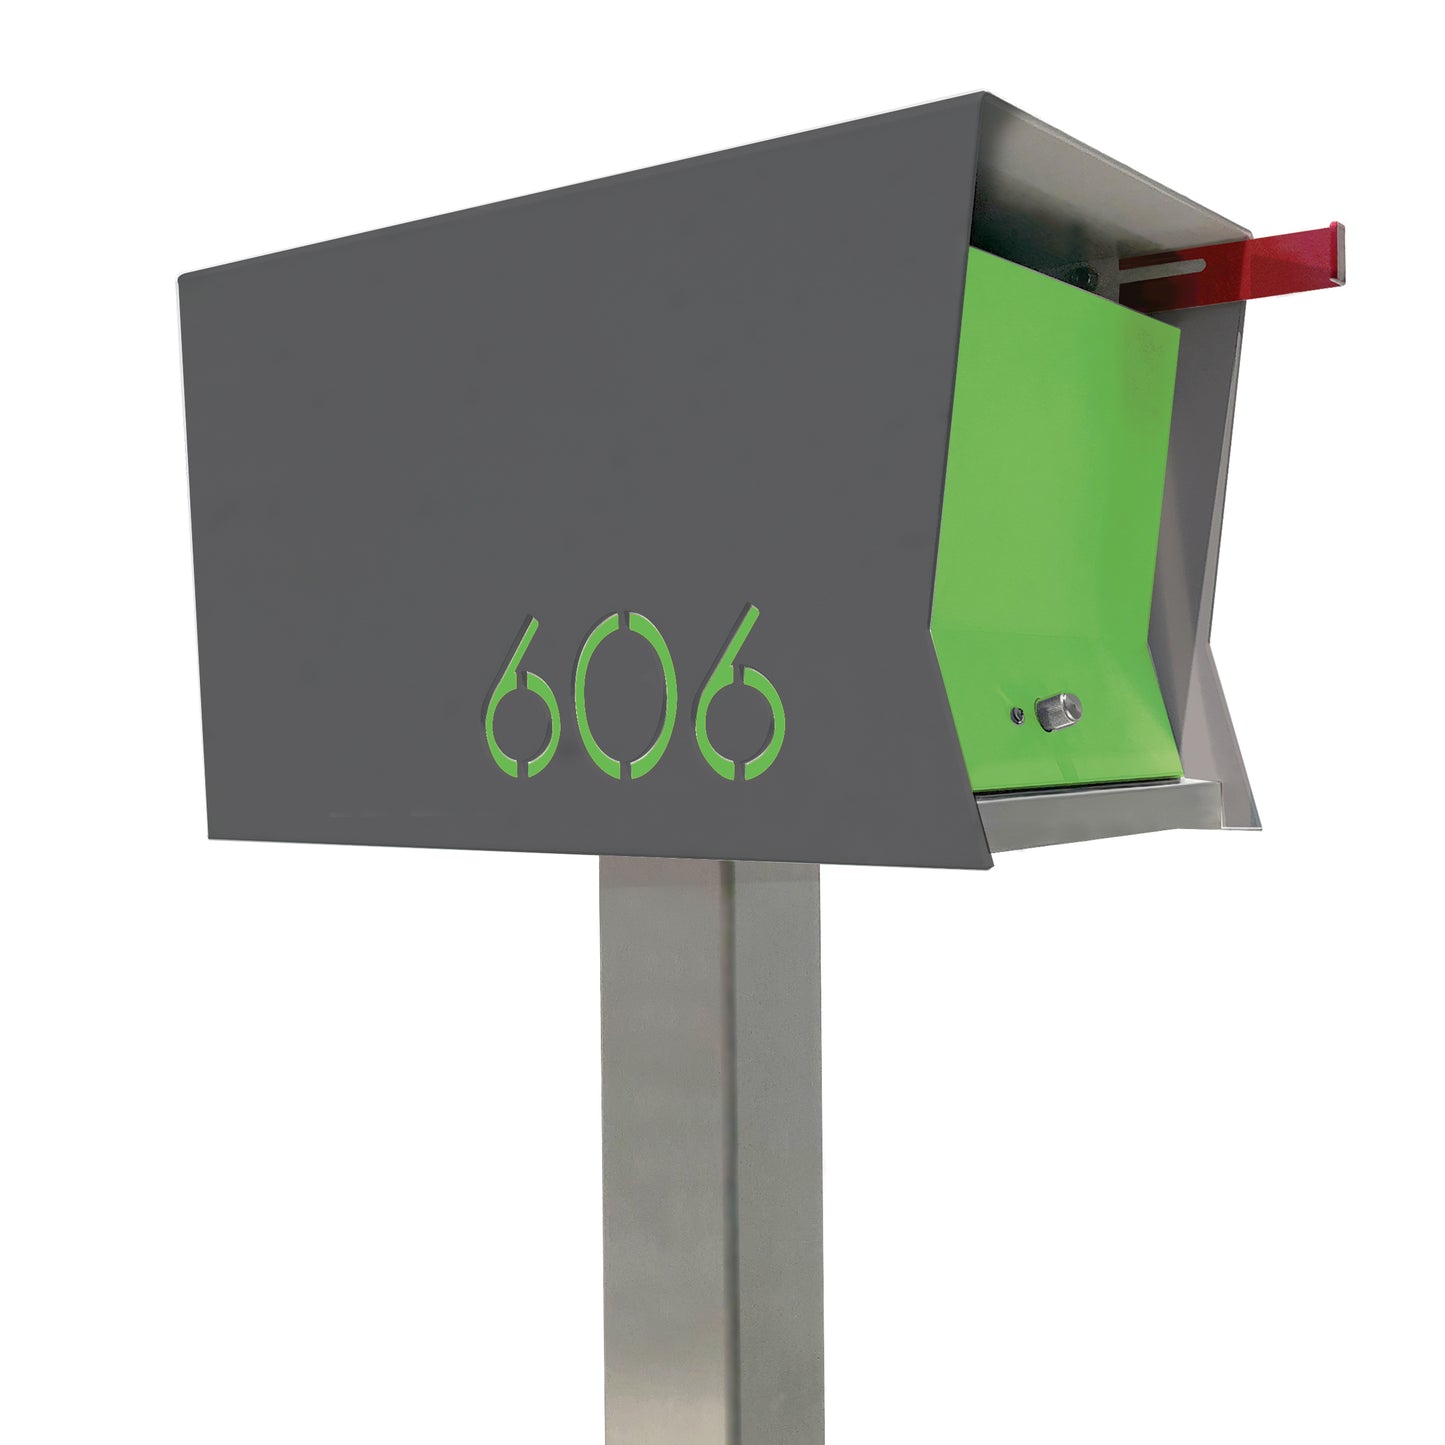 The Original Retrobox in DESIGNER GRAY - Modern Mailbox grey and green